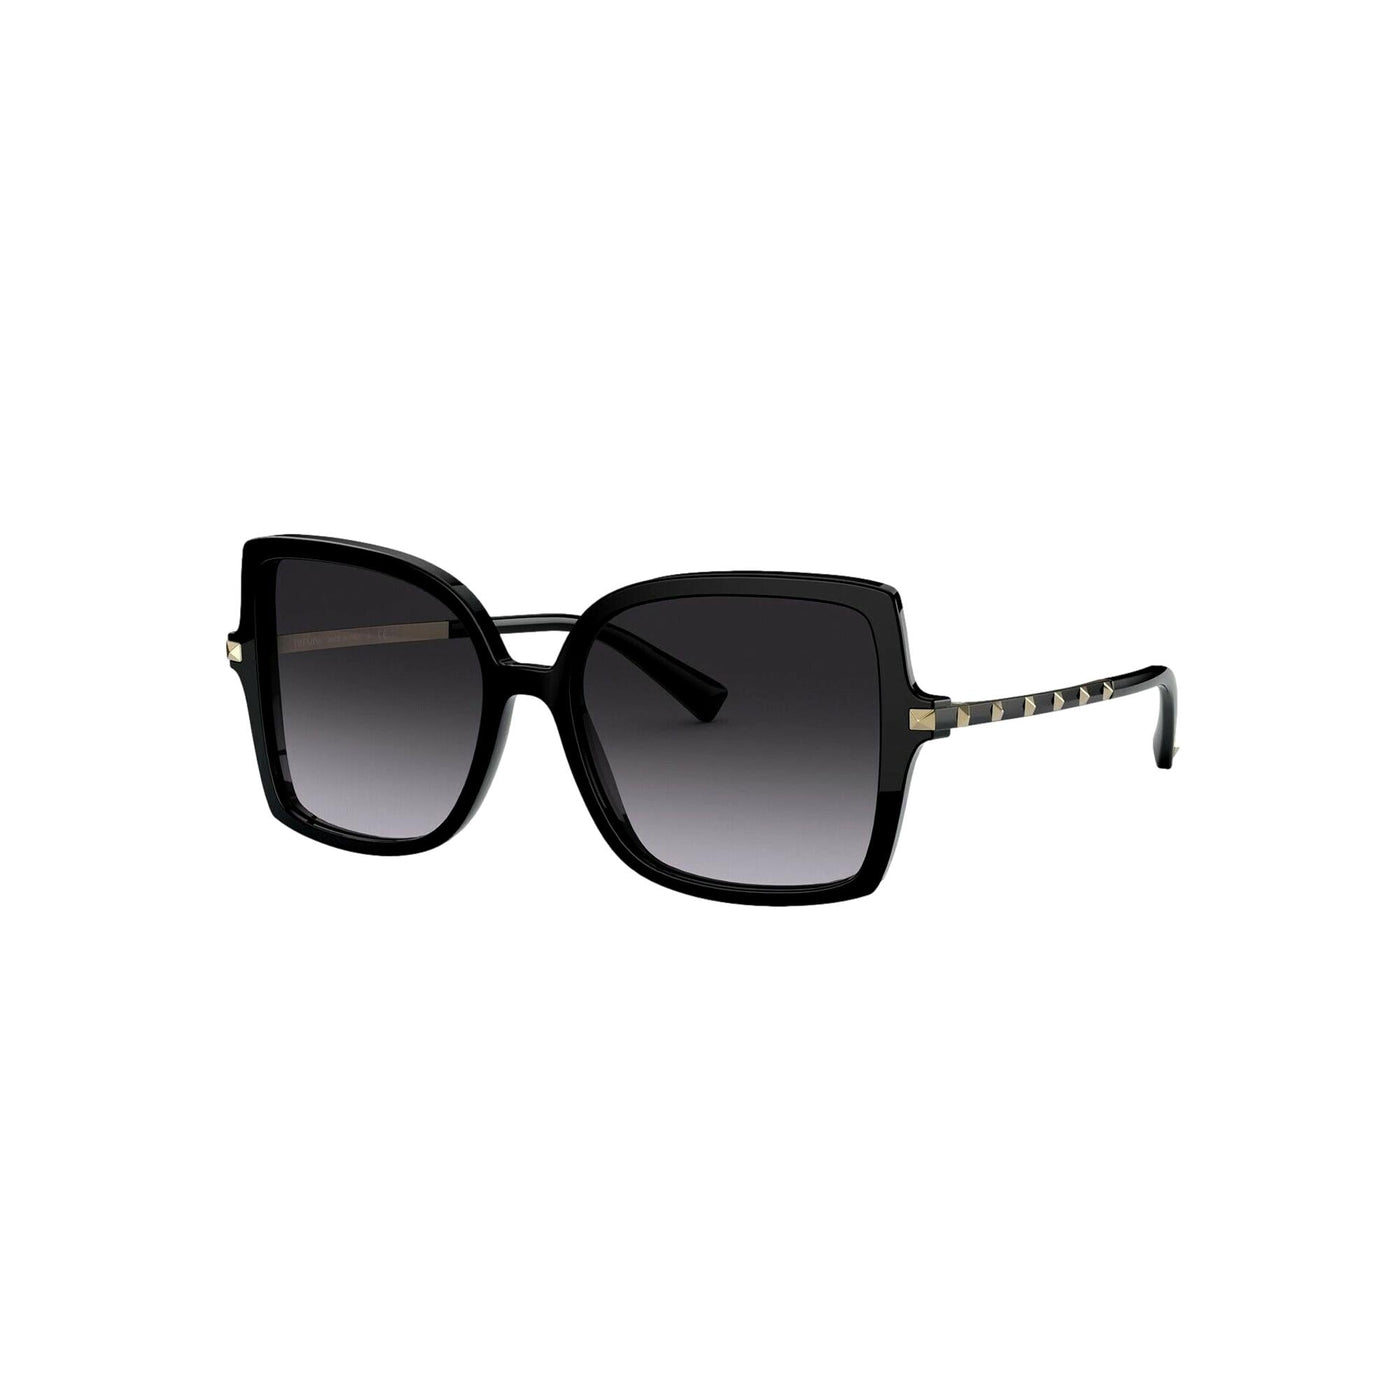 Valentino Garavani Black Studded Acetate and Titanium Sunglasses Size 56 - LUXURYMRKT